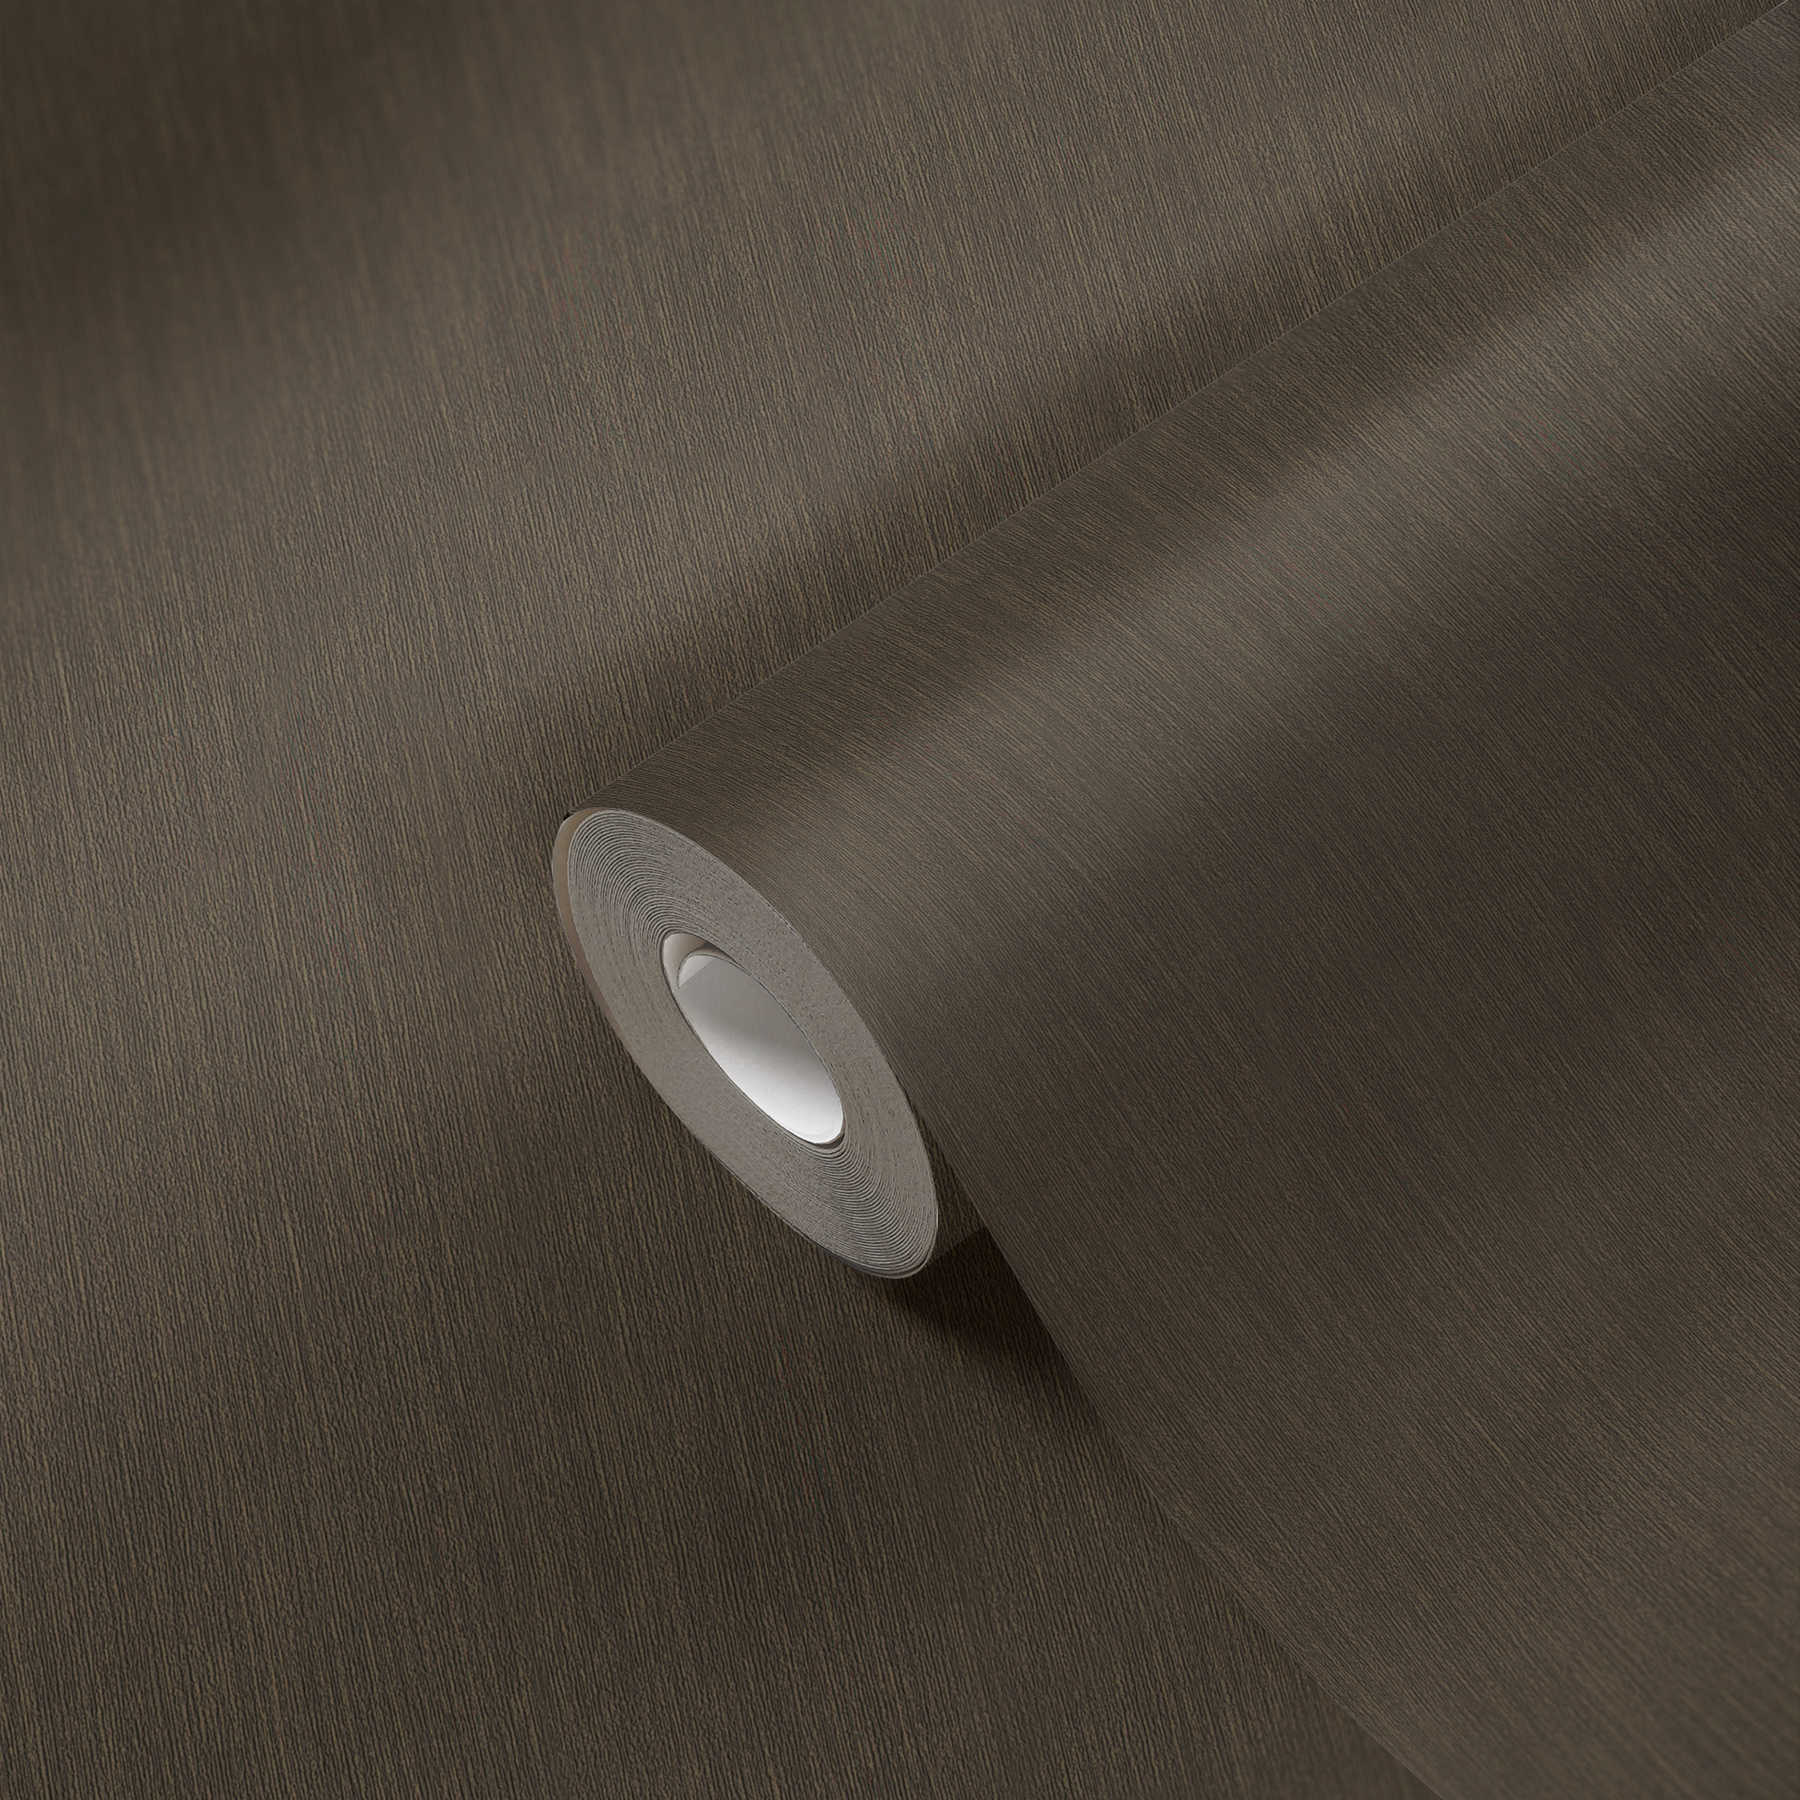             Premium non-woven wallpaper plain, satin - brown
        